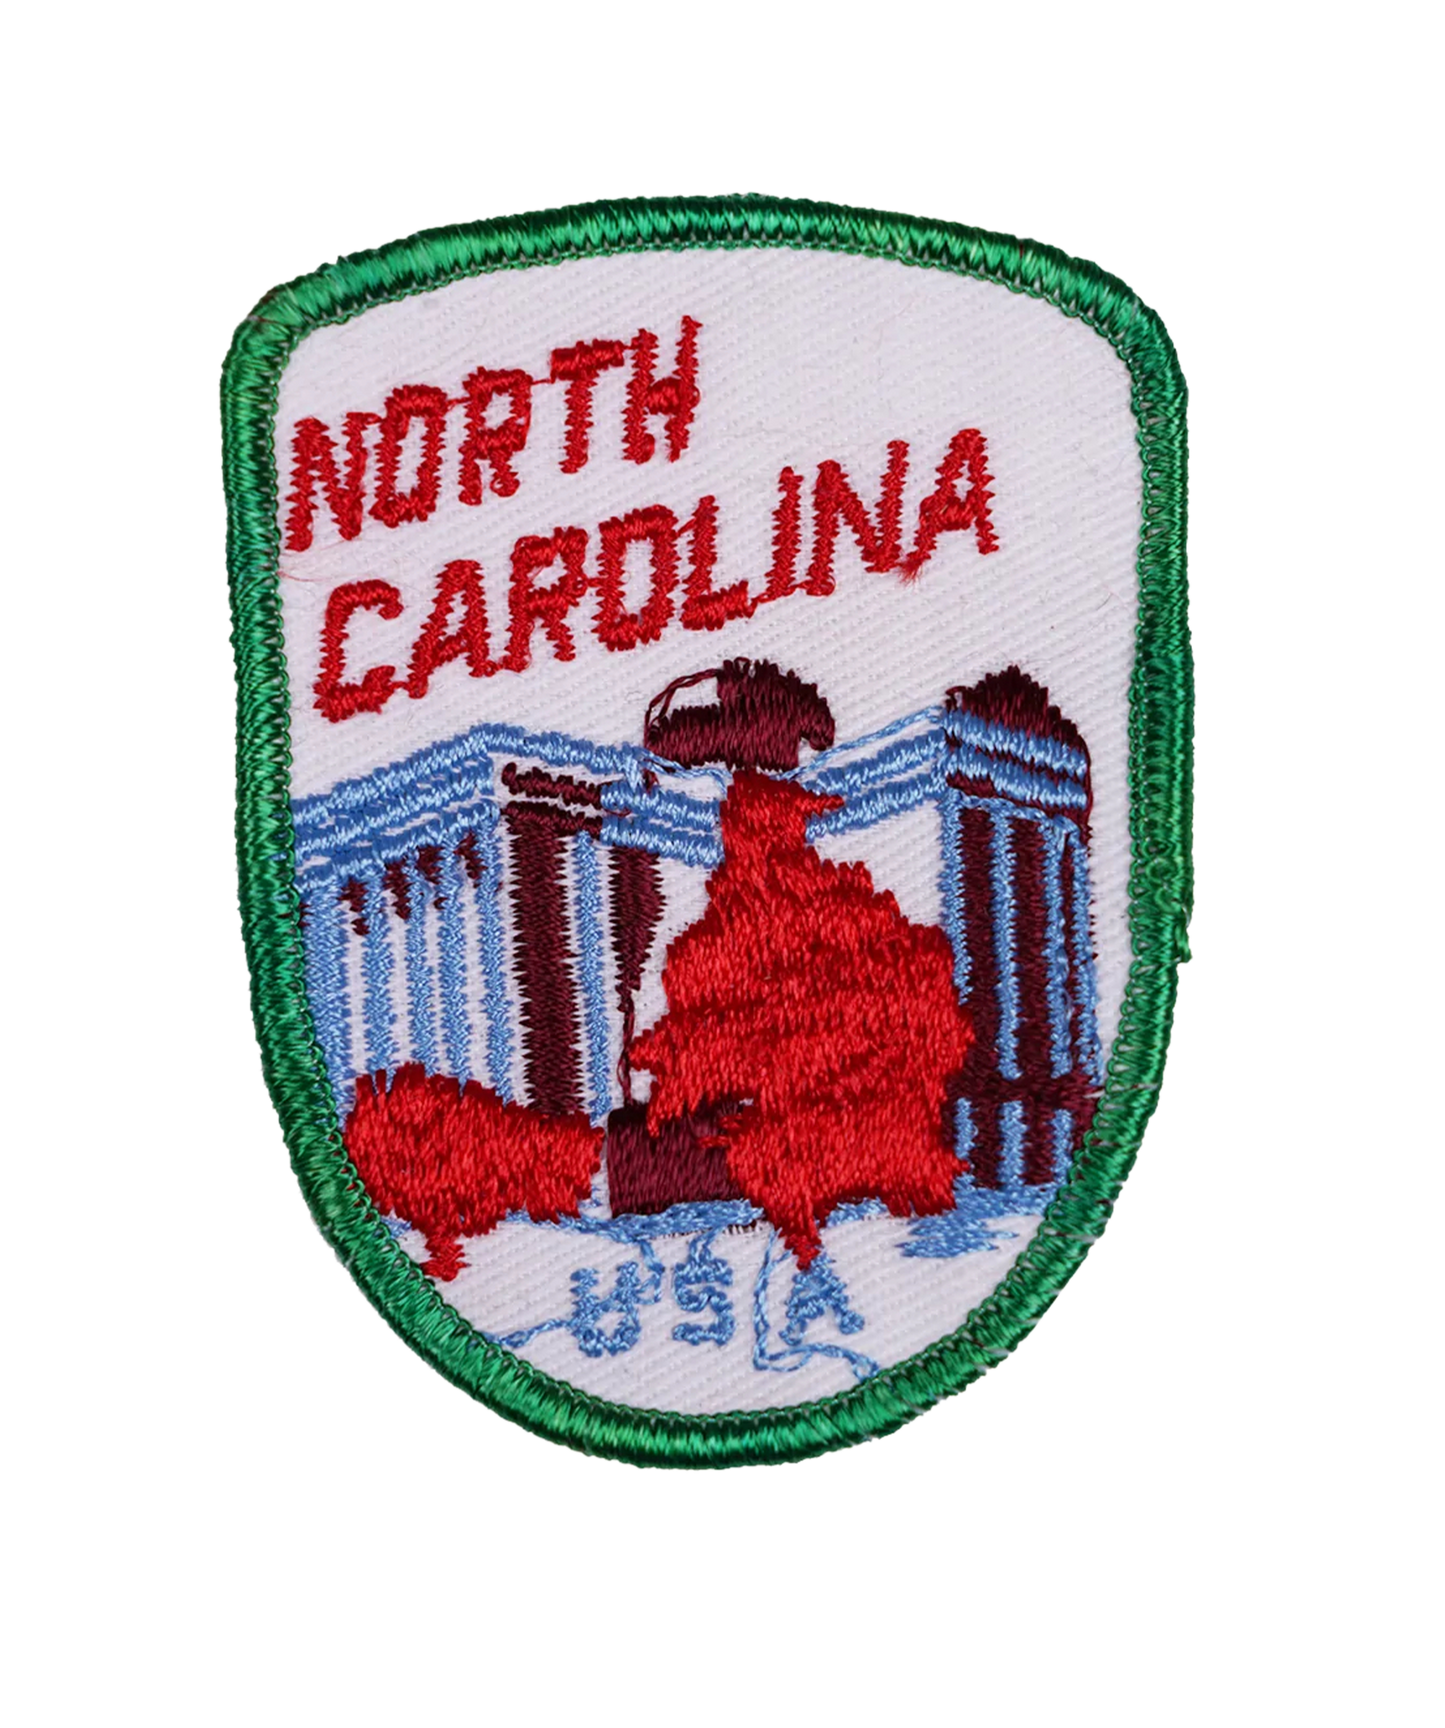 Vintage North Carolina Embroidered Patch